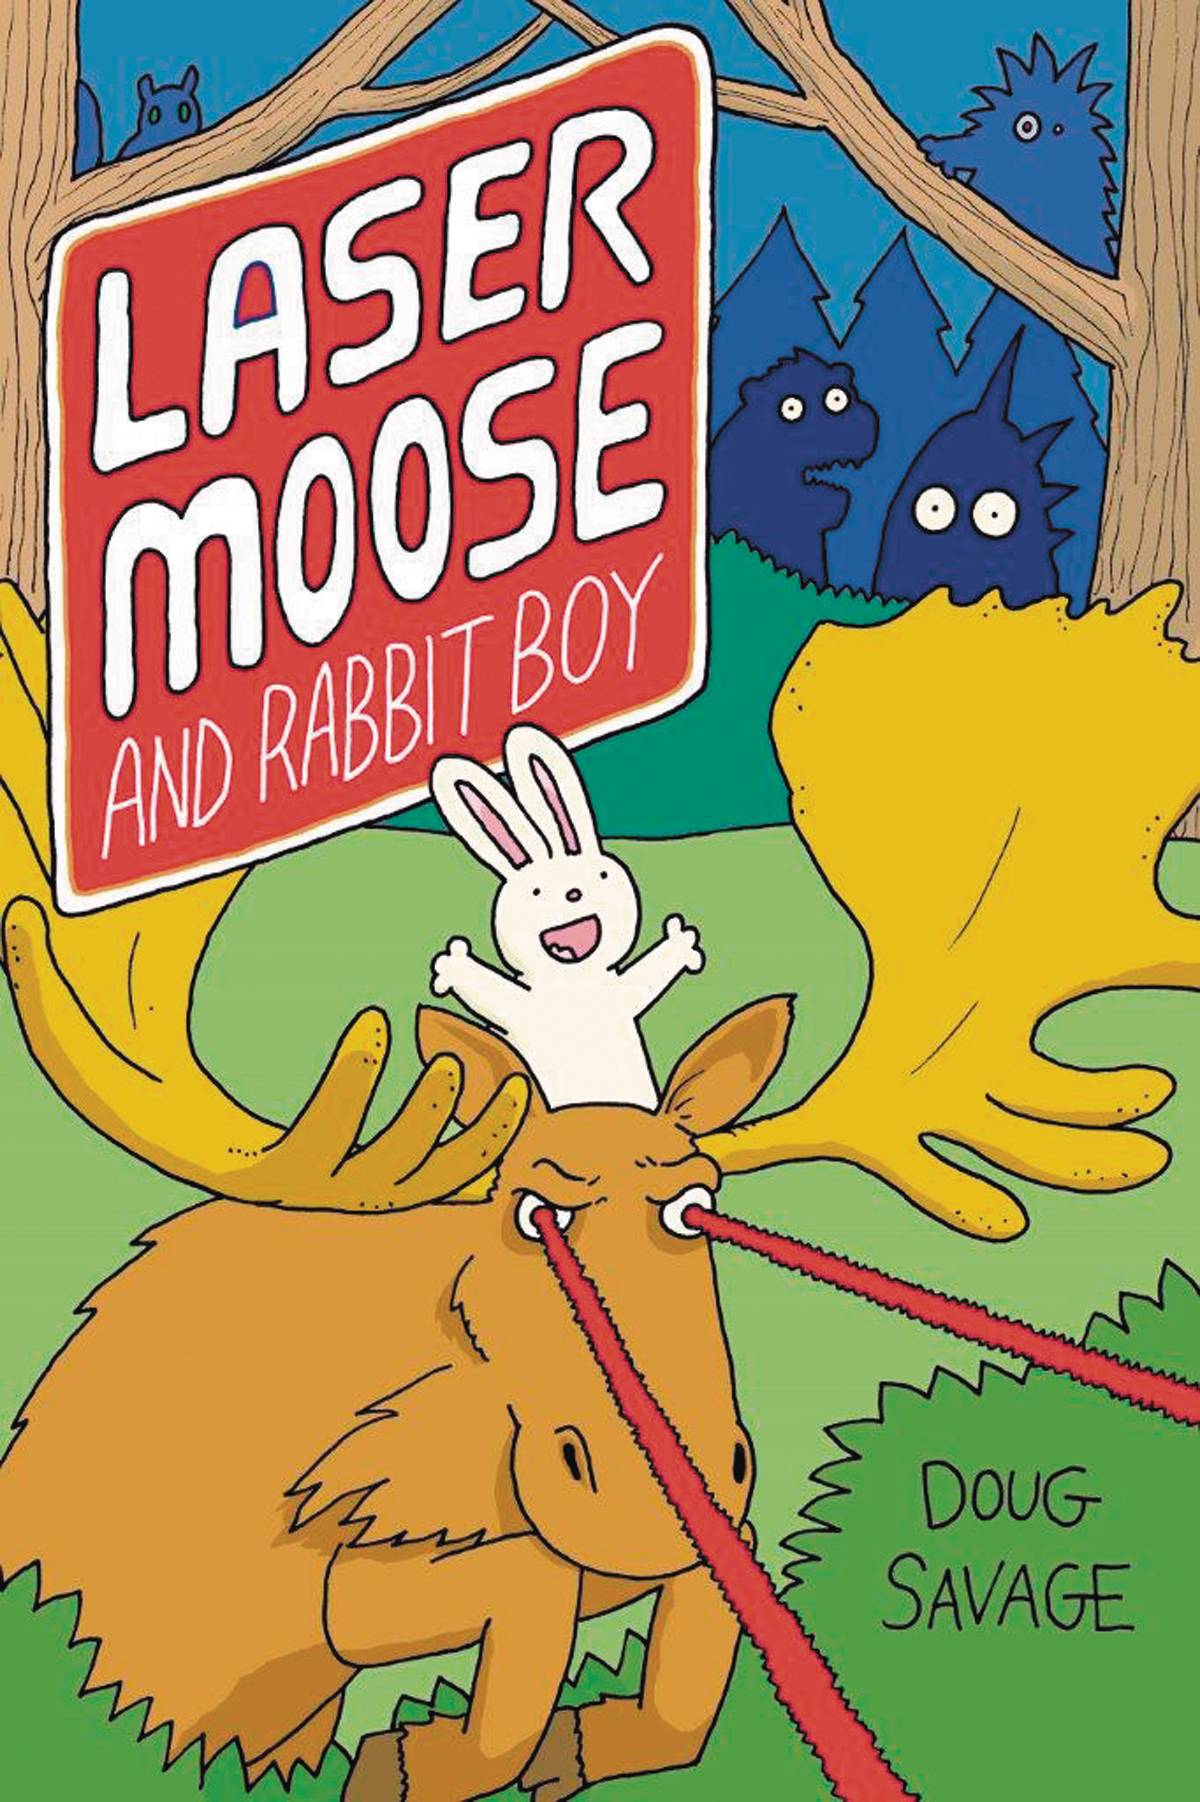 Laser Moose And Rabbit Boy Graphic Novel